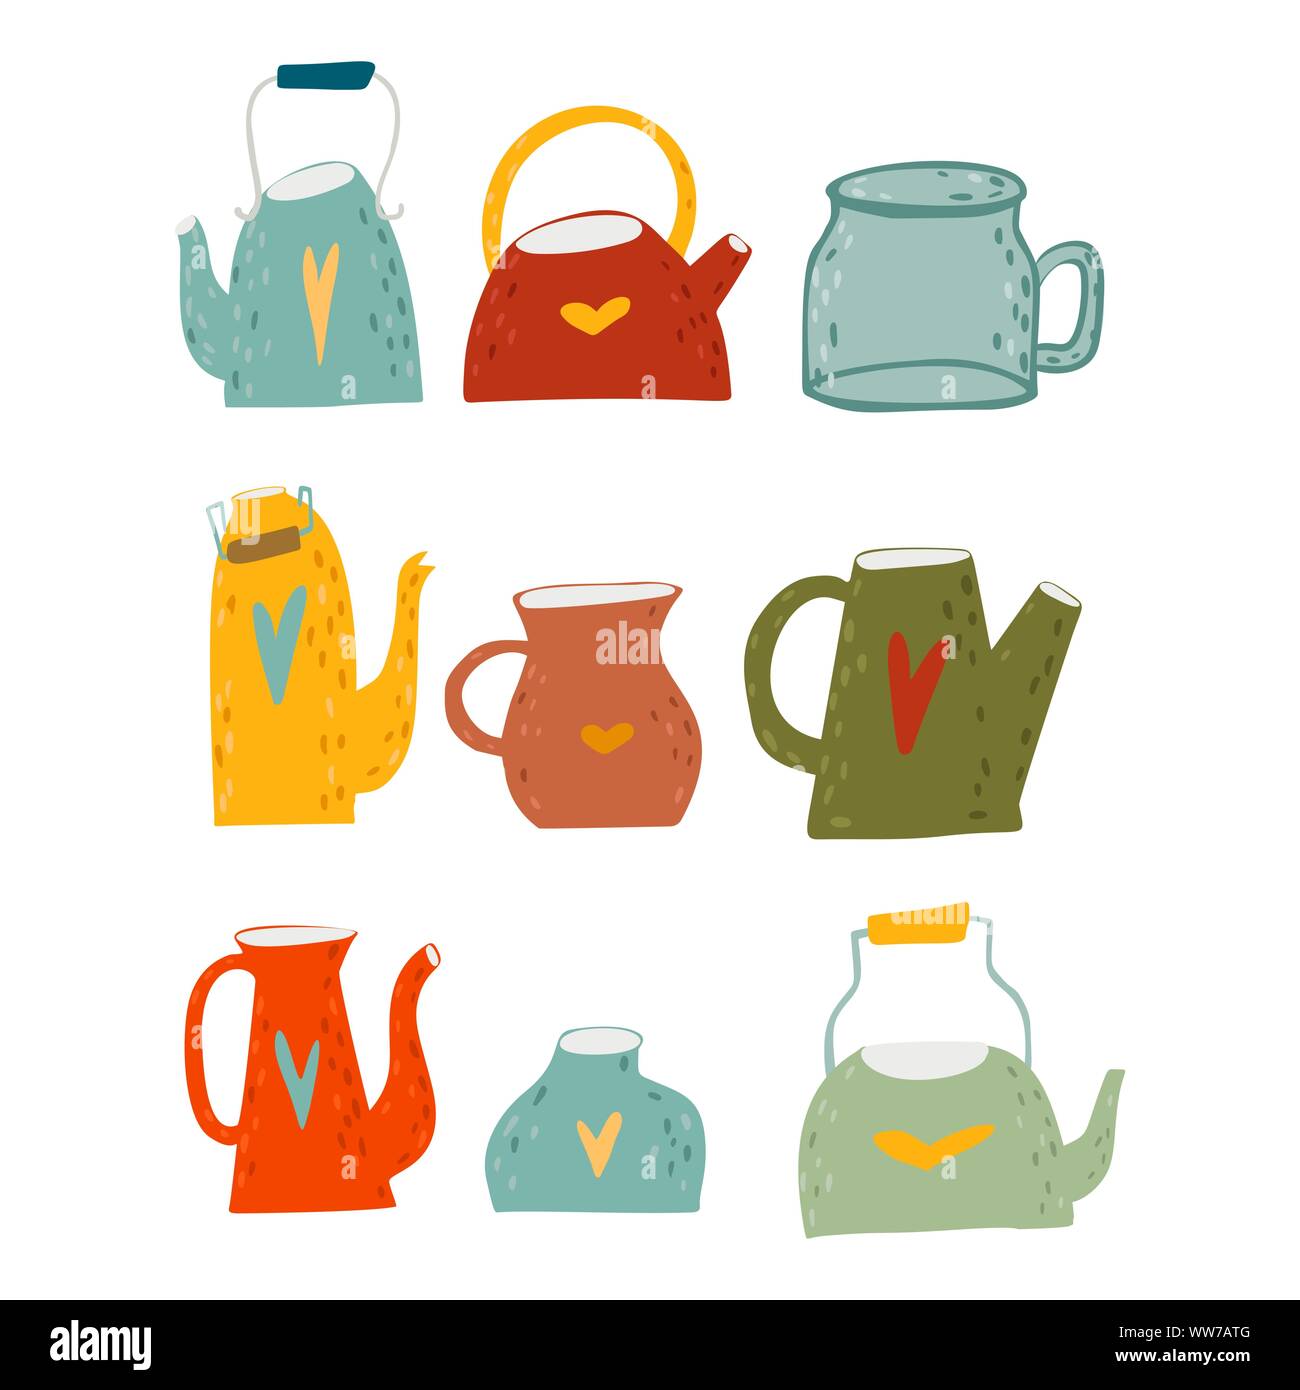 https://c8.alamy.com/comp/WW7ATG/set-of-vector-teapots-cartoon-style-illustration-WW7ATG.jpg